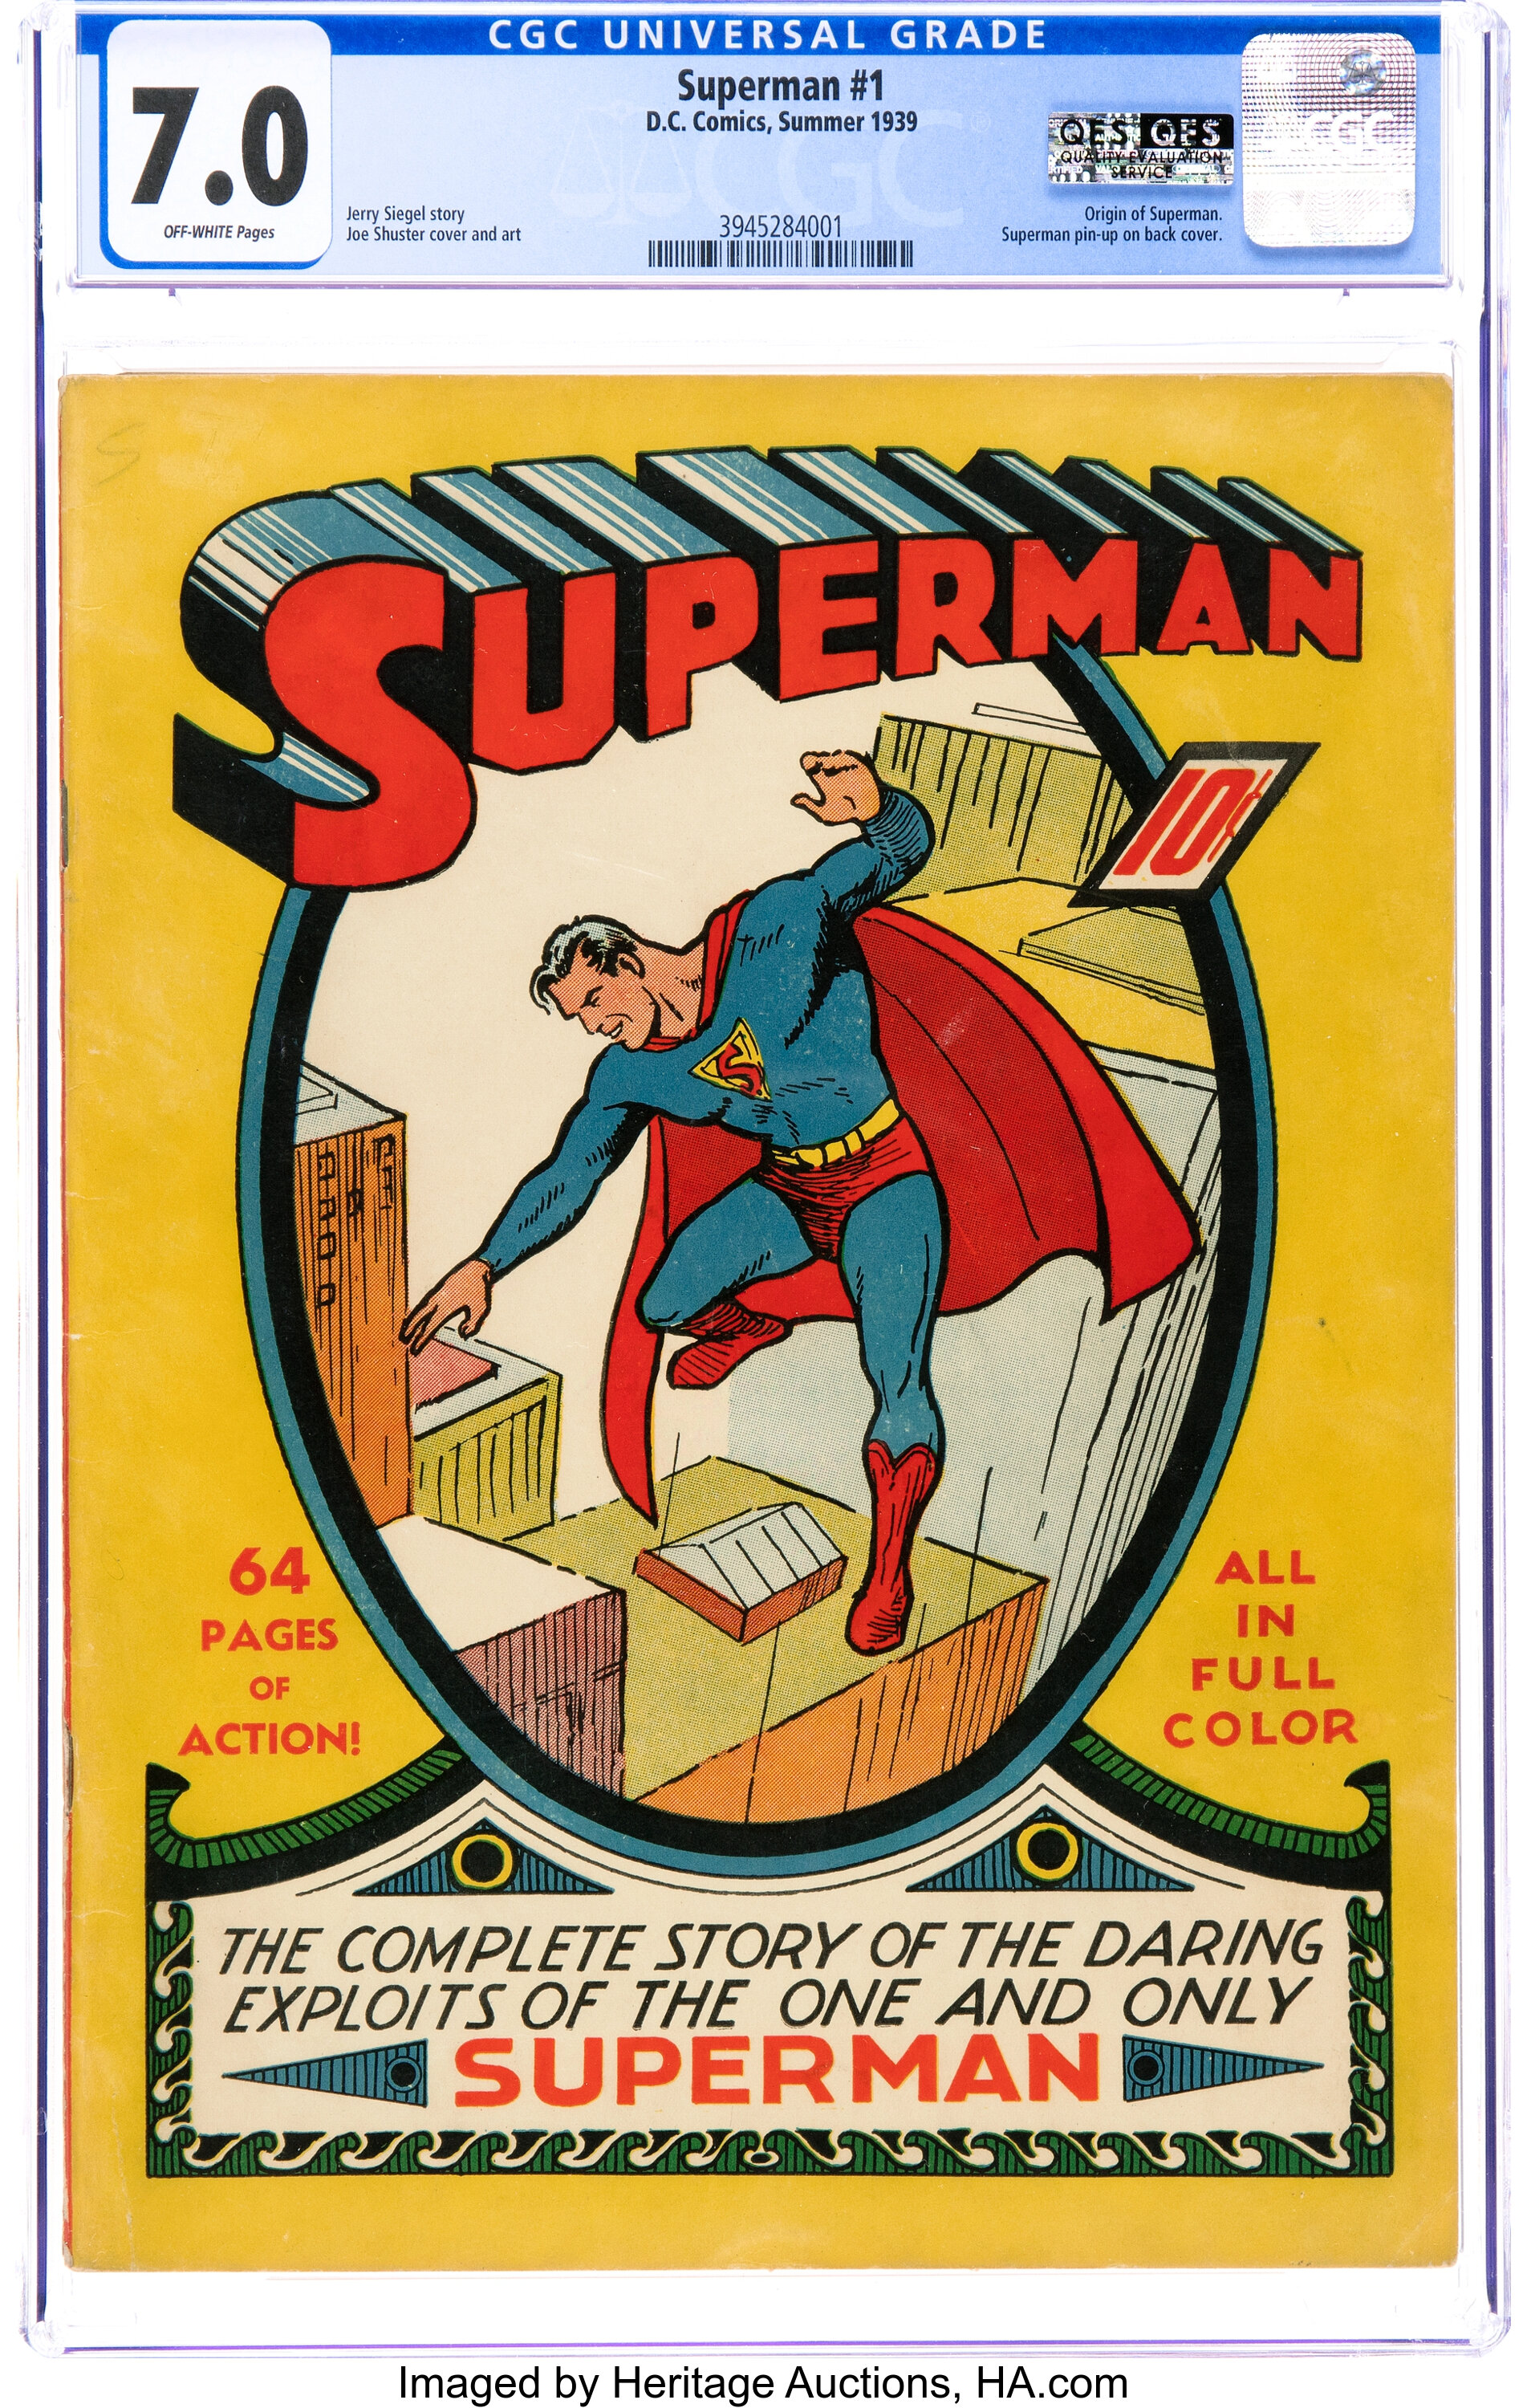 https://www.fortalezadelasoledad.com/imagenes/2024/01/12/heritage_comics_and_comic_art_auction_2024_superman_no1.jpg